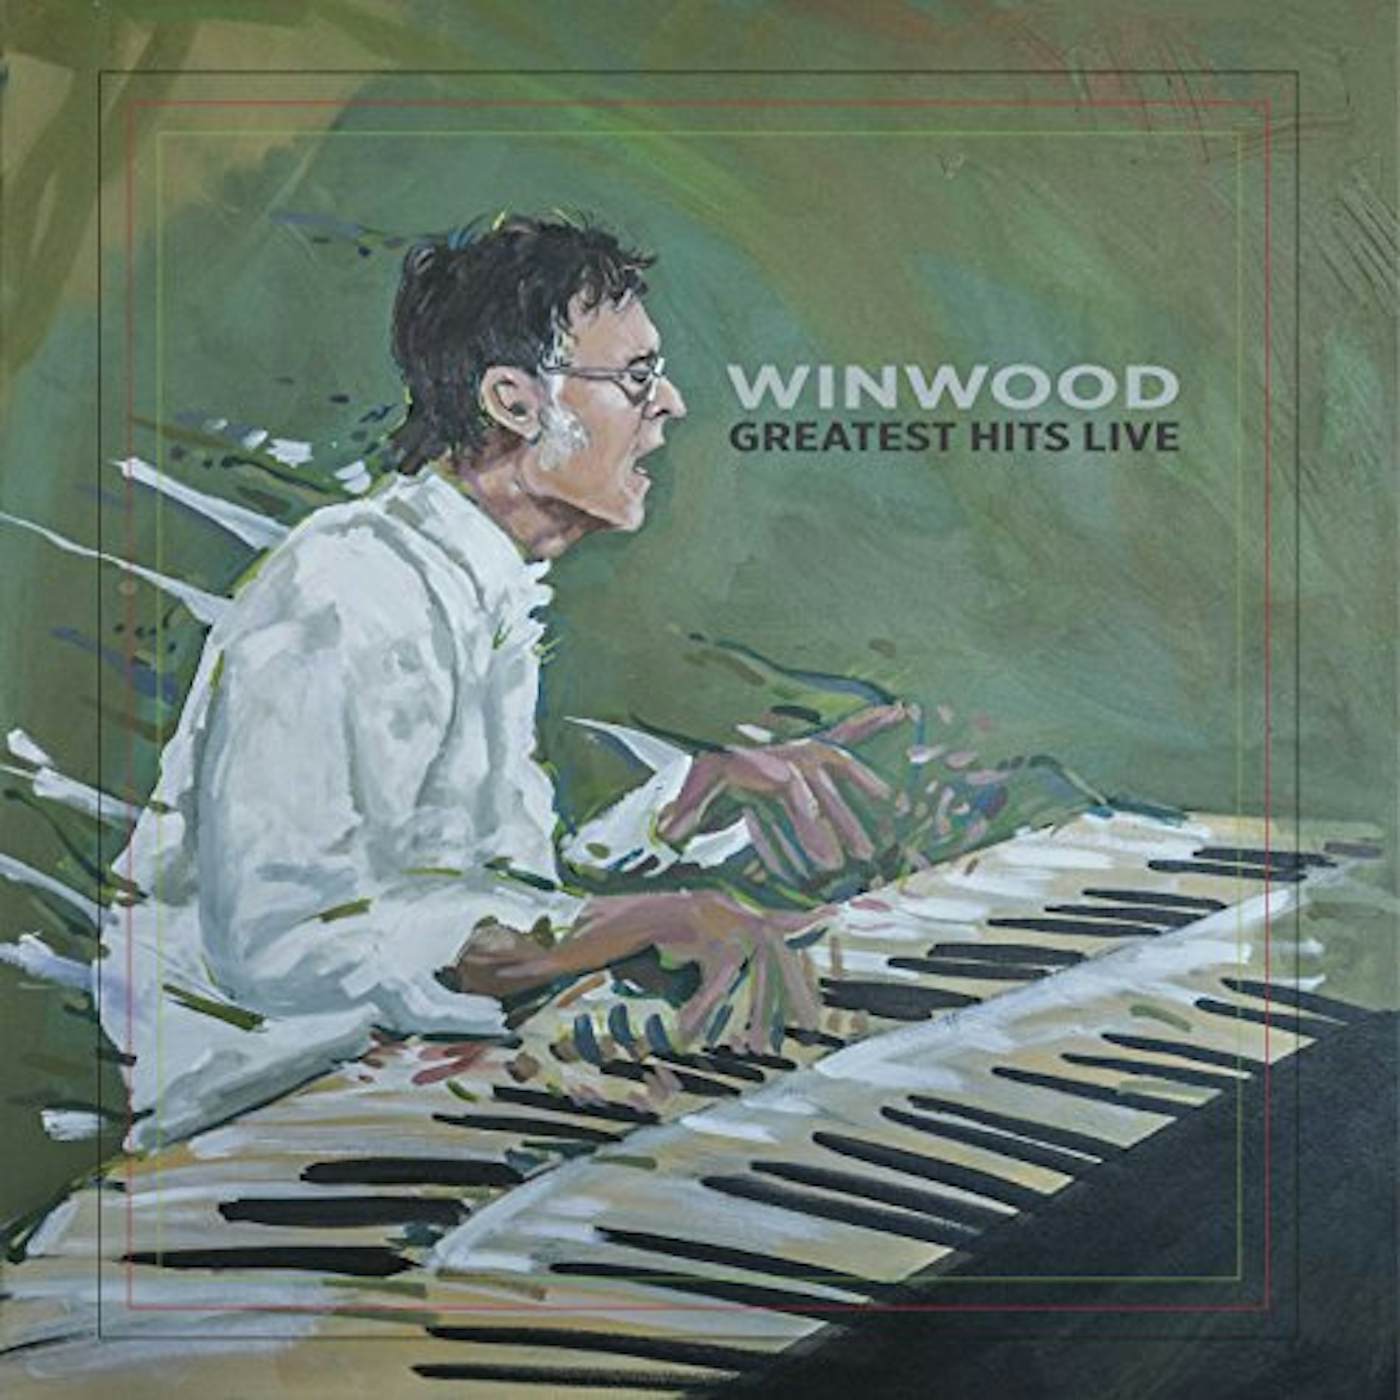 Steve Winwood Winwood Greatest Hits Live Vinyl Record